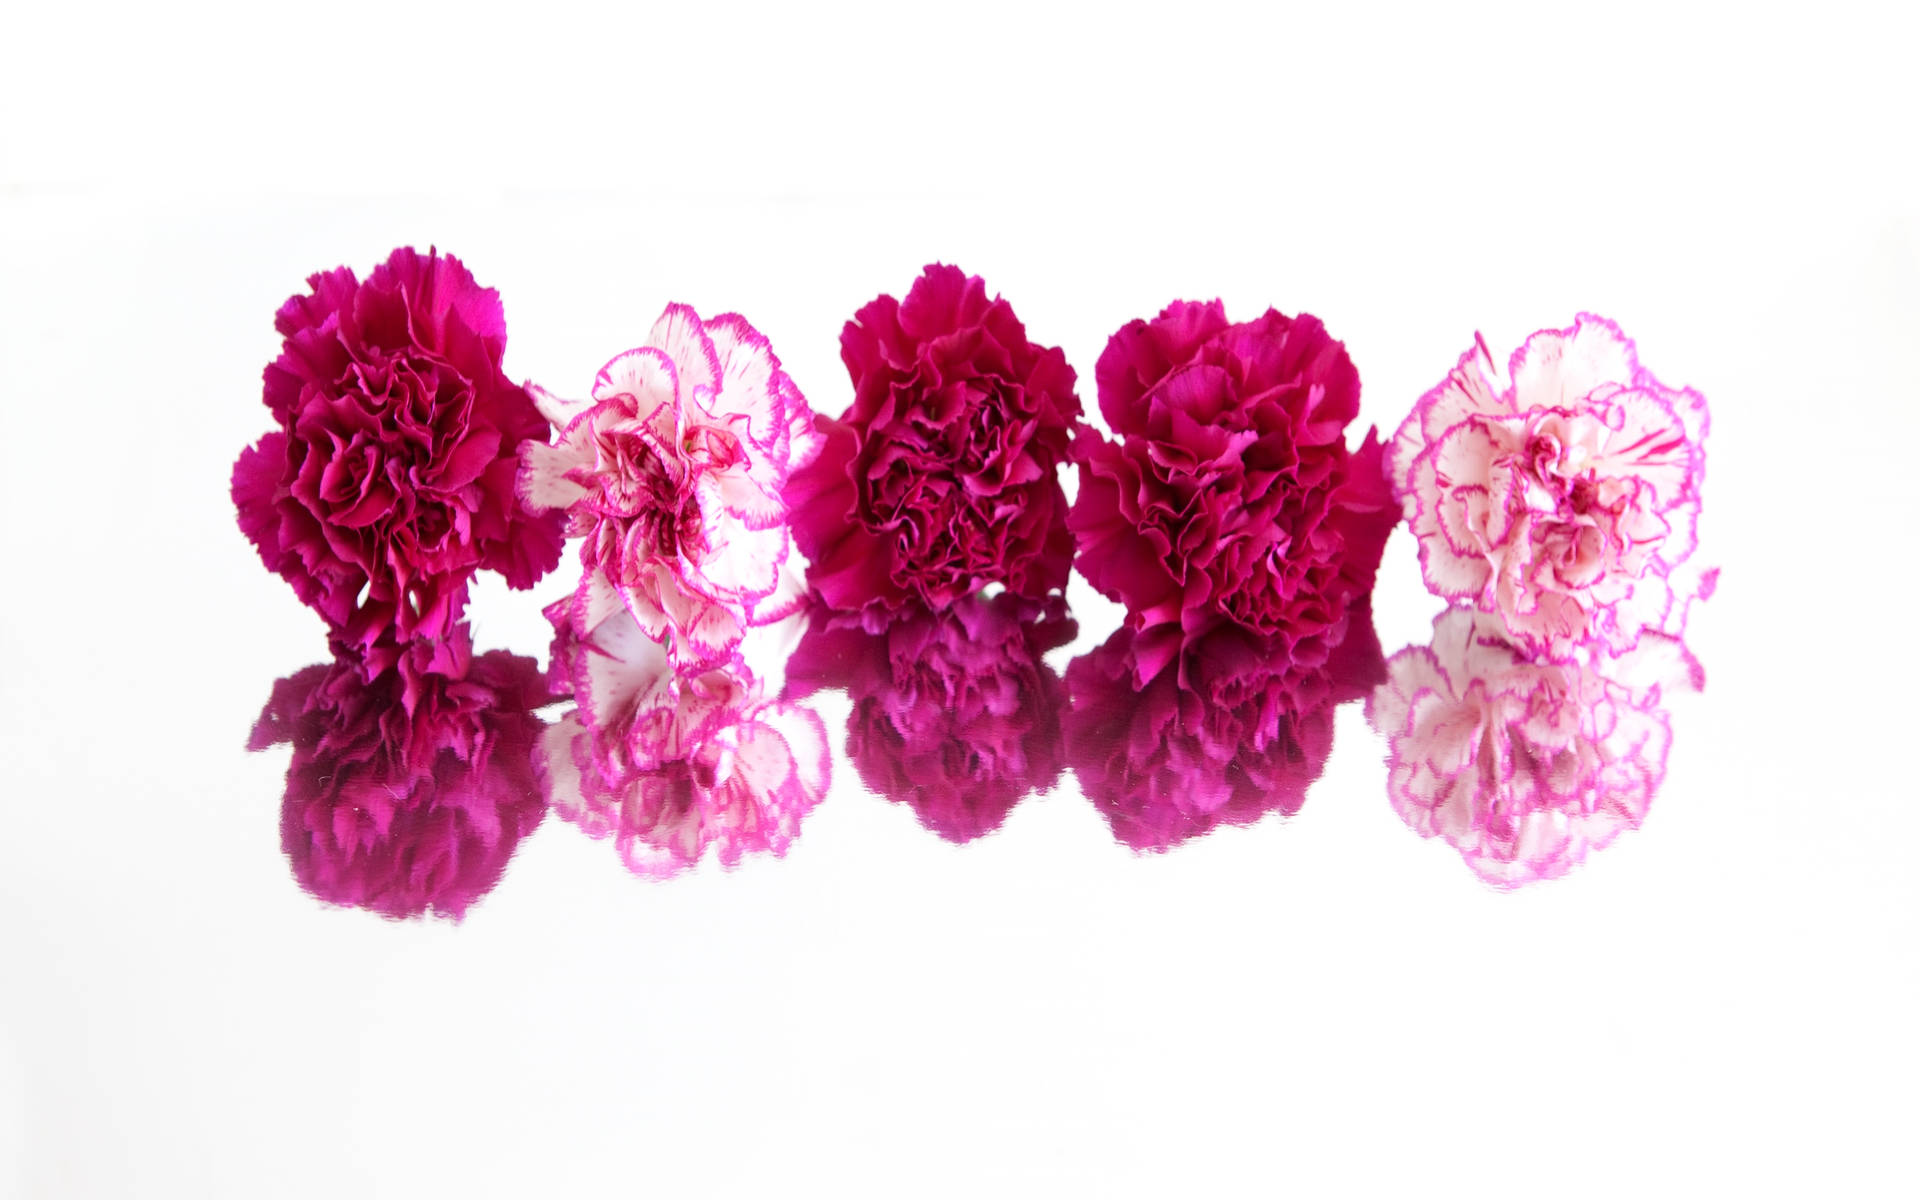 Carnations Reflection Effect Wallpaper